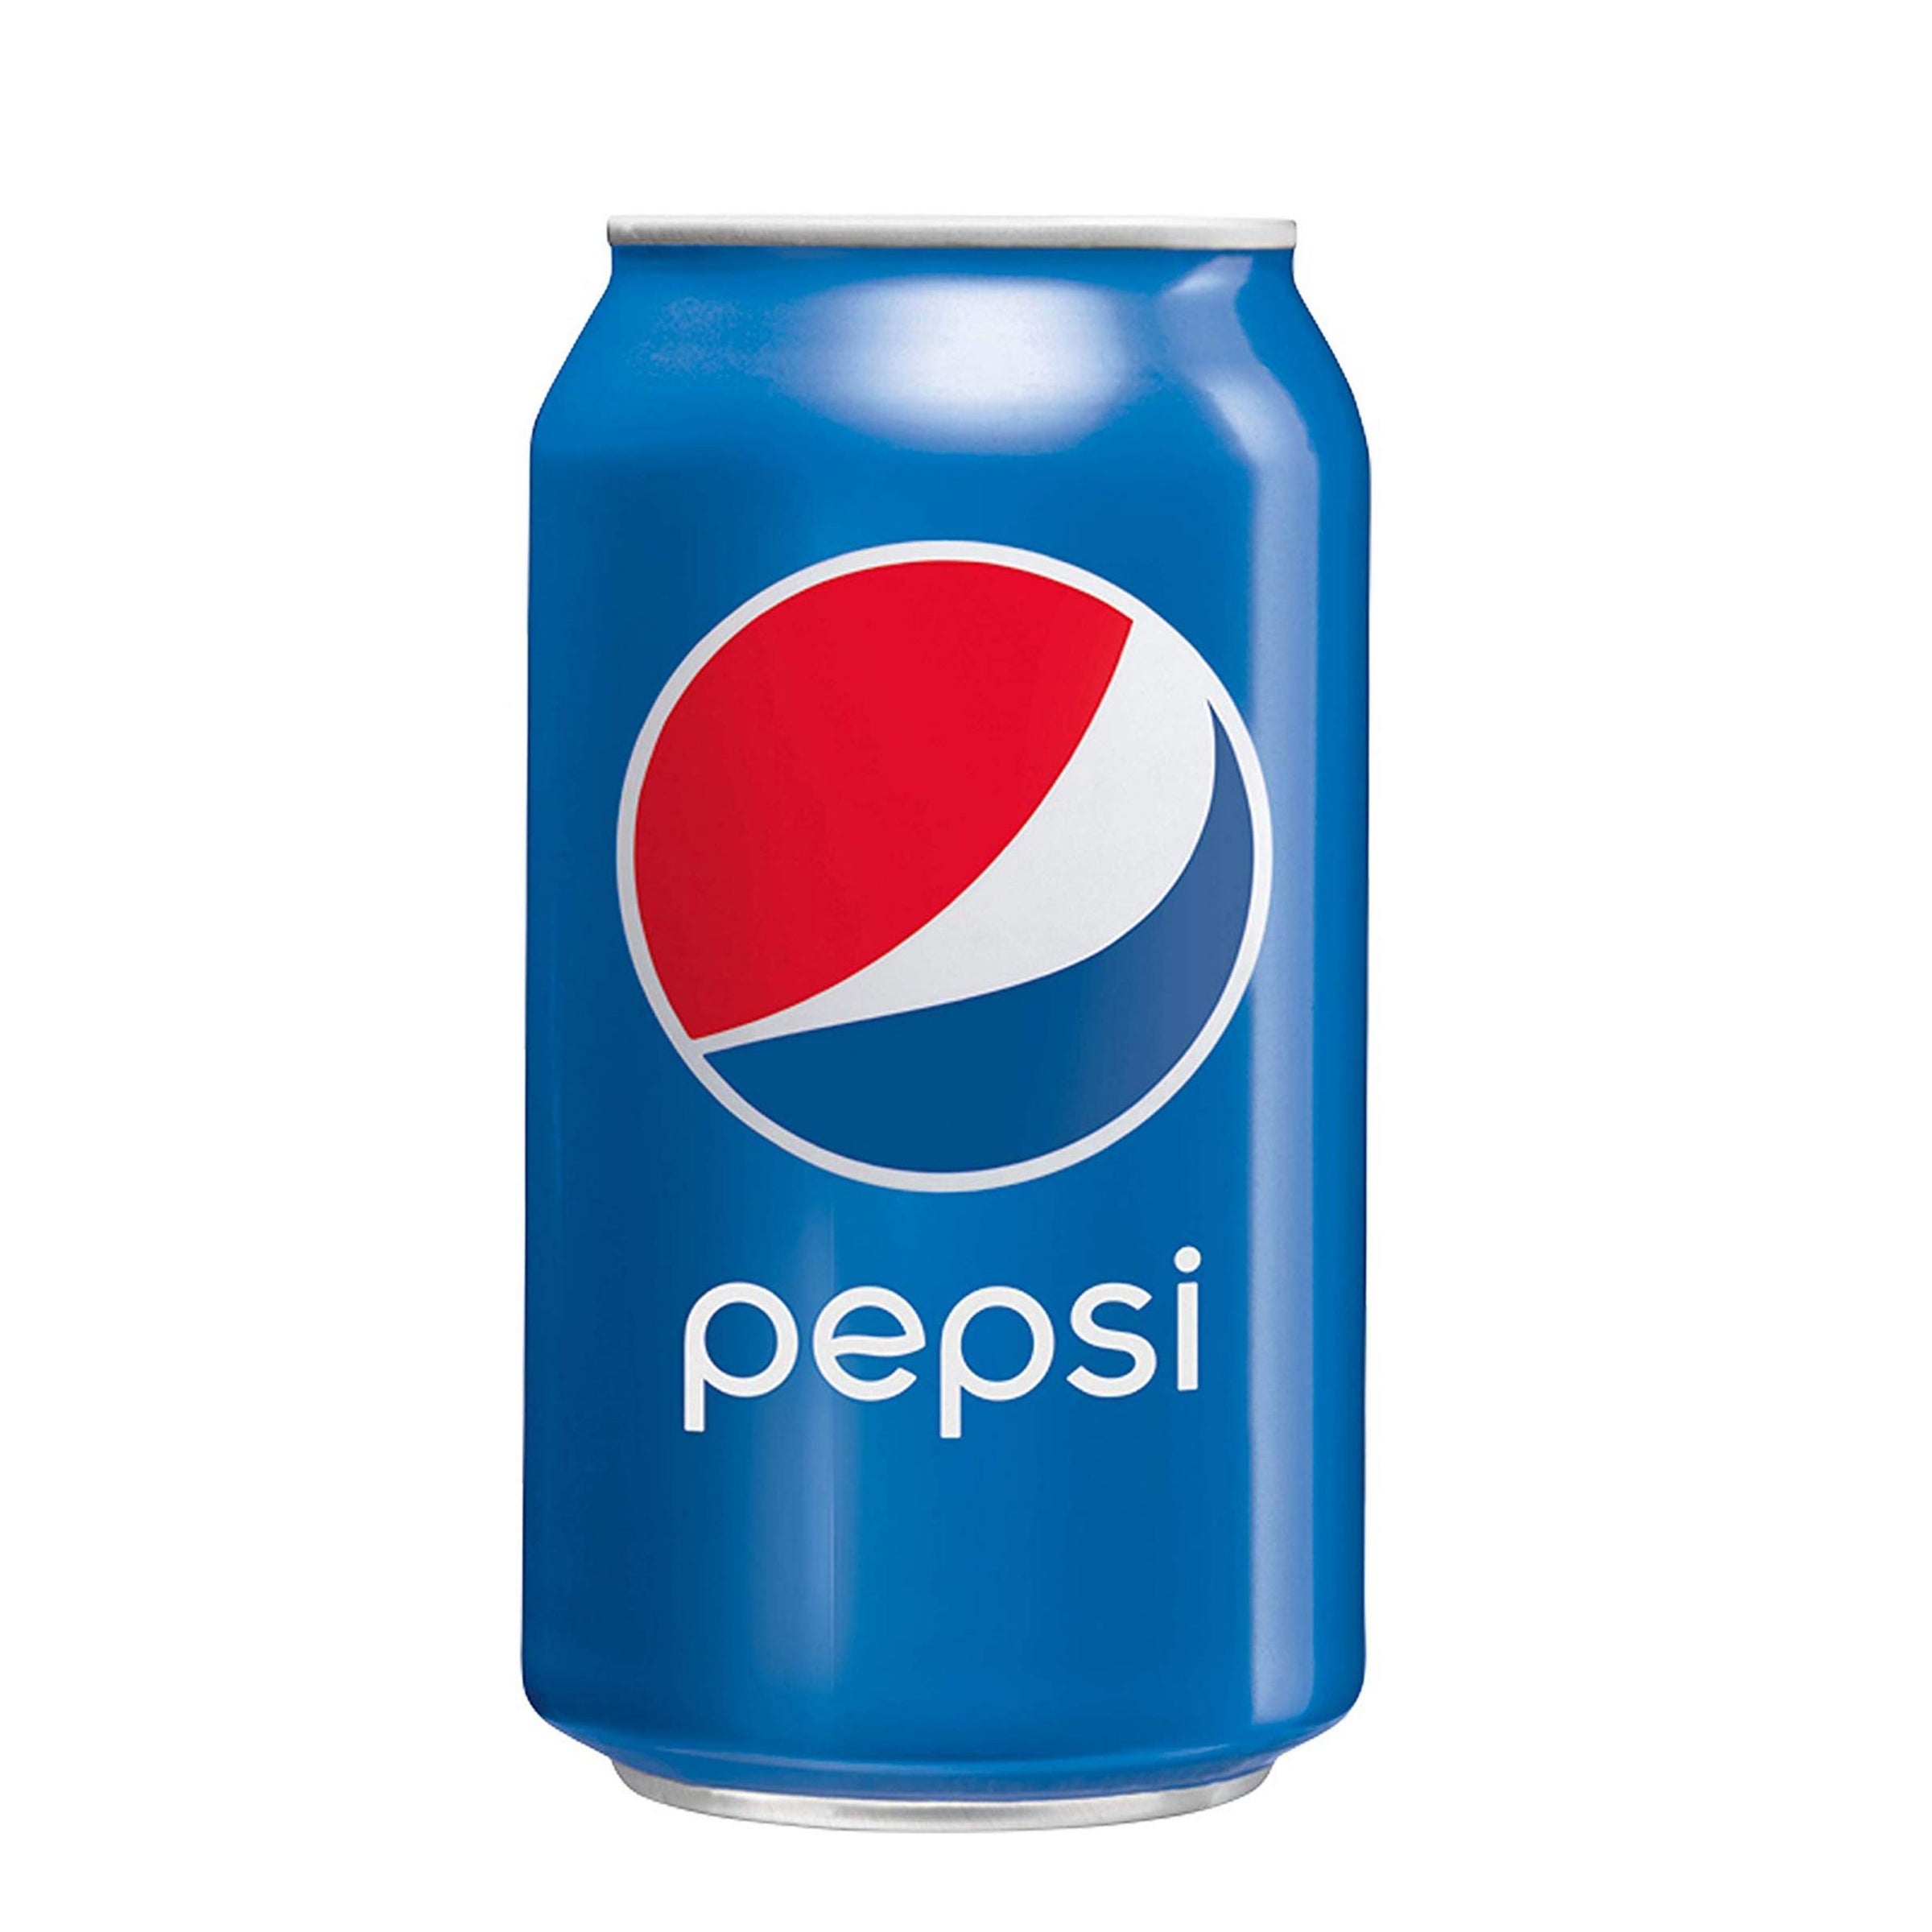 GYROZ EATERY Pepsi Can |